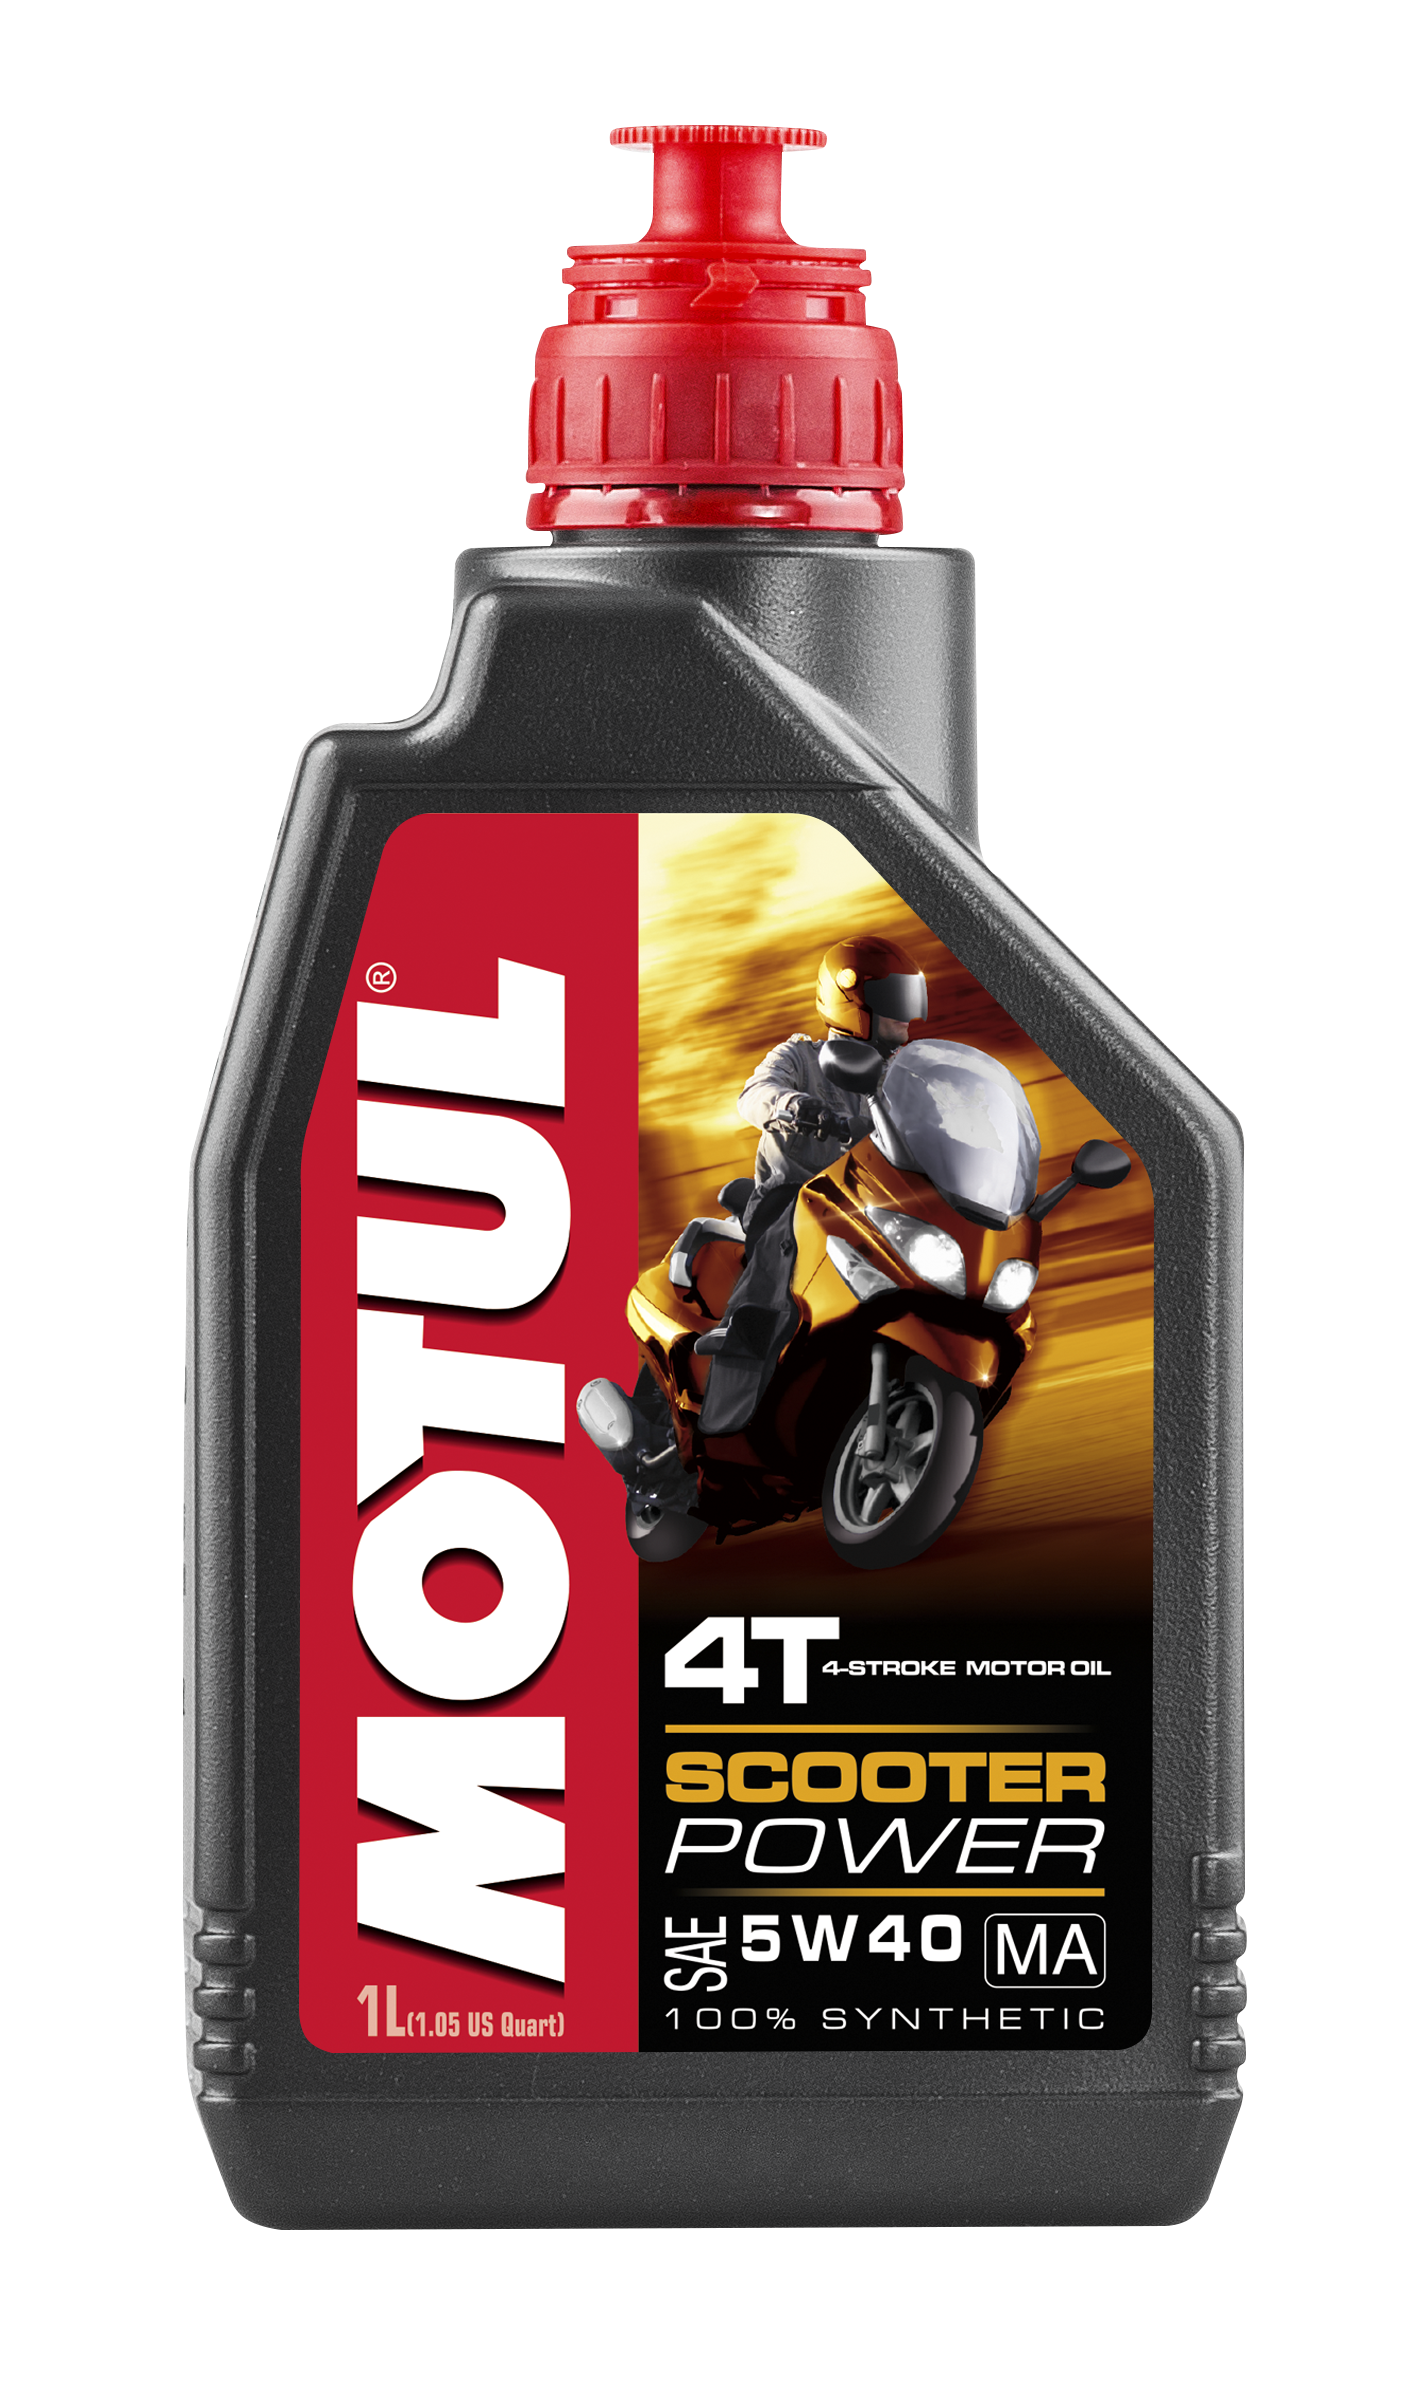 MOTUL Scooter Power 4T SAE 5W-40 MA  1 л